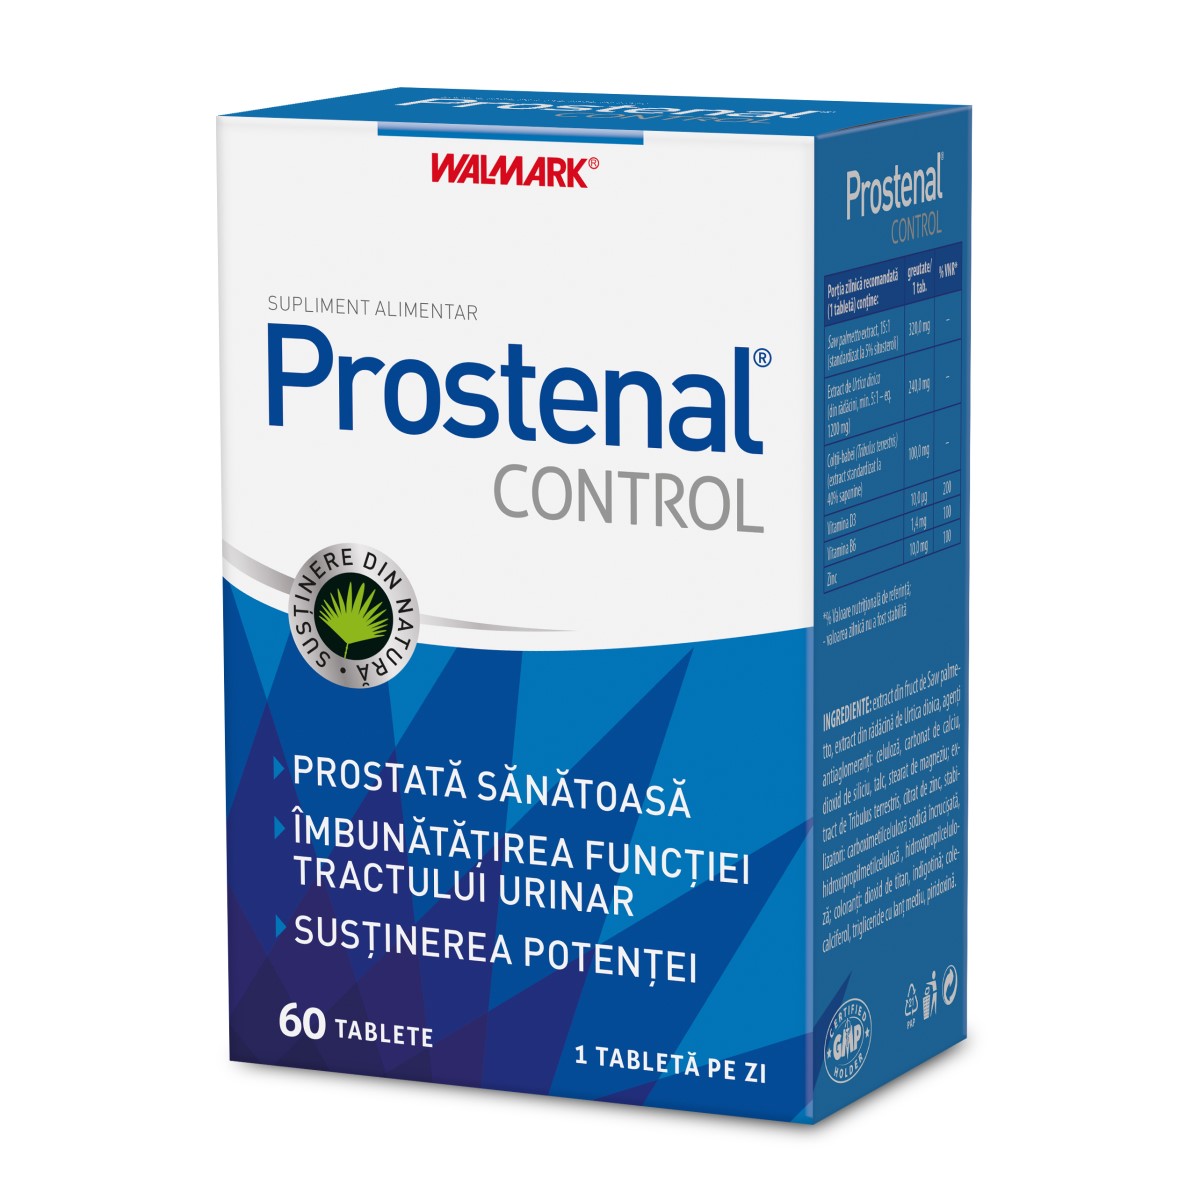 prostenal control dona